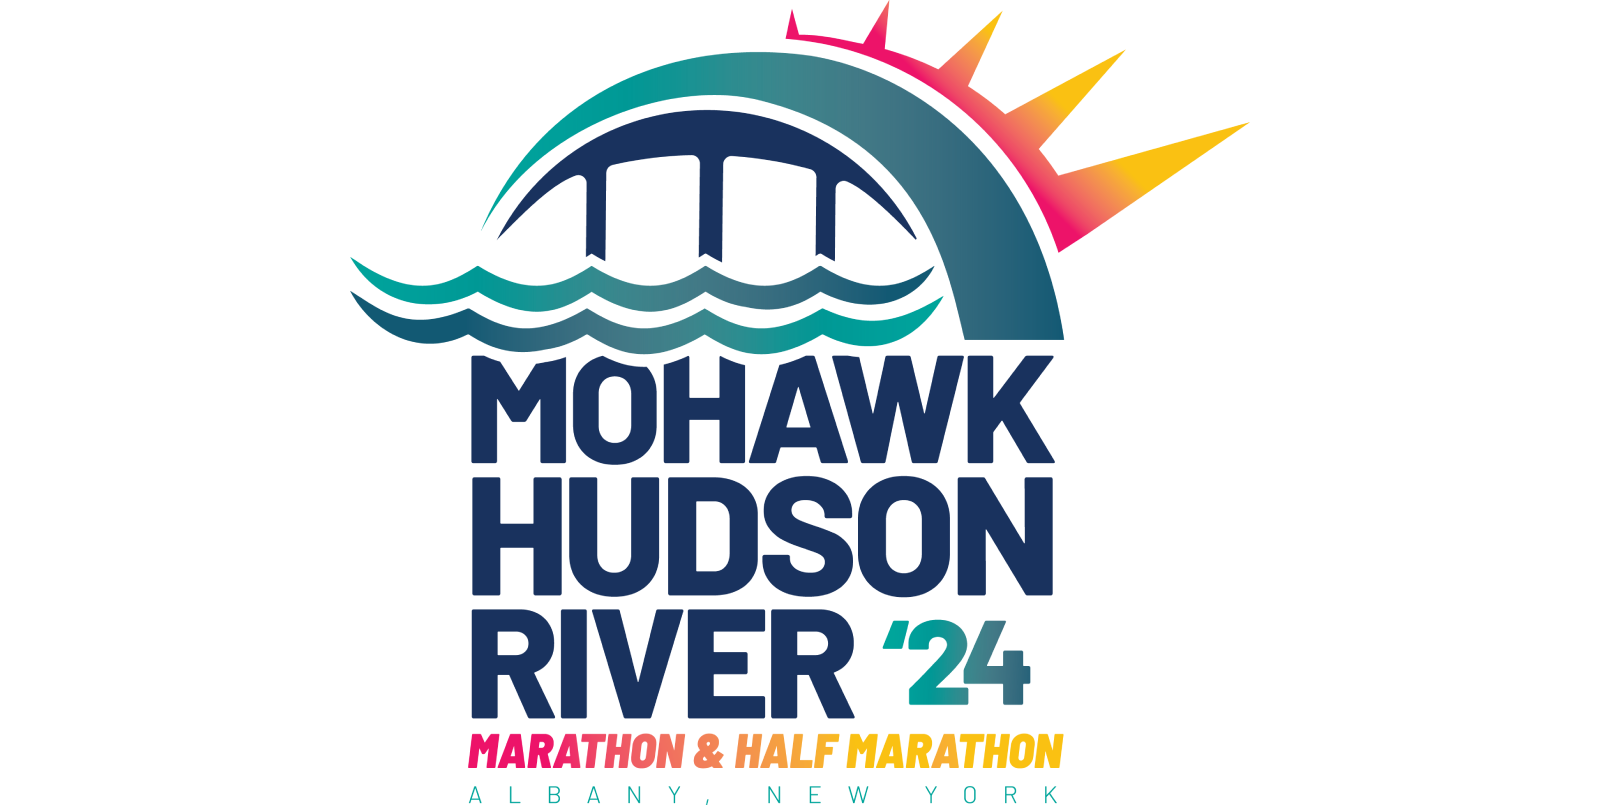 Mohawk Hudson River Marathon